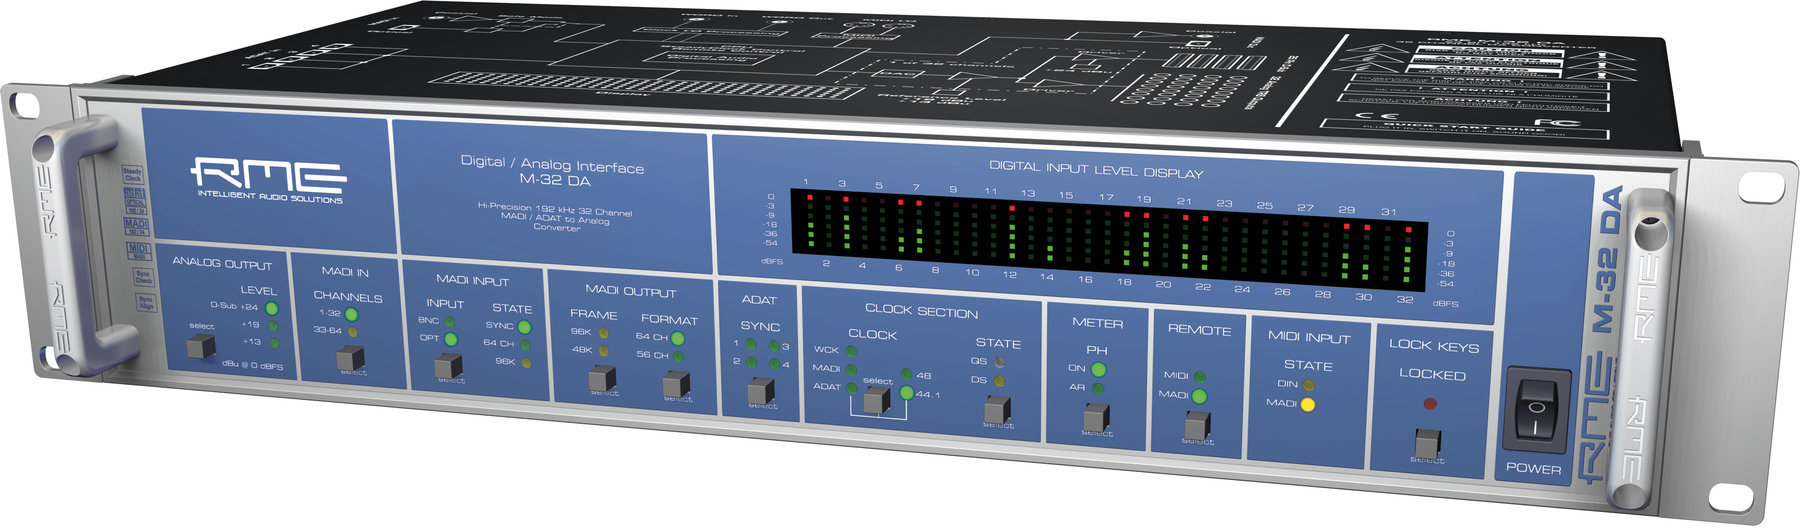 Digital audio converter RME M-32 DA